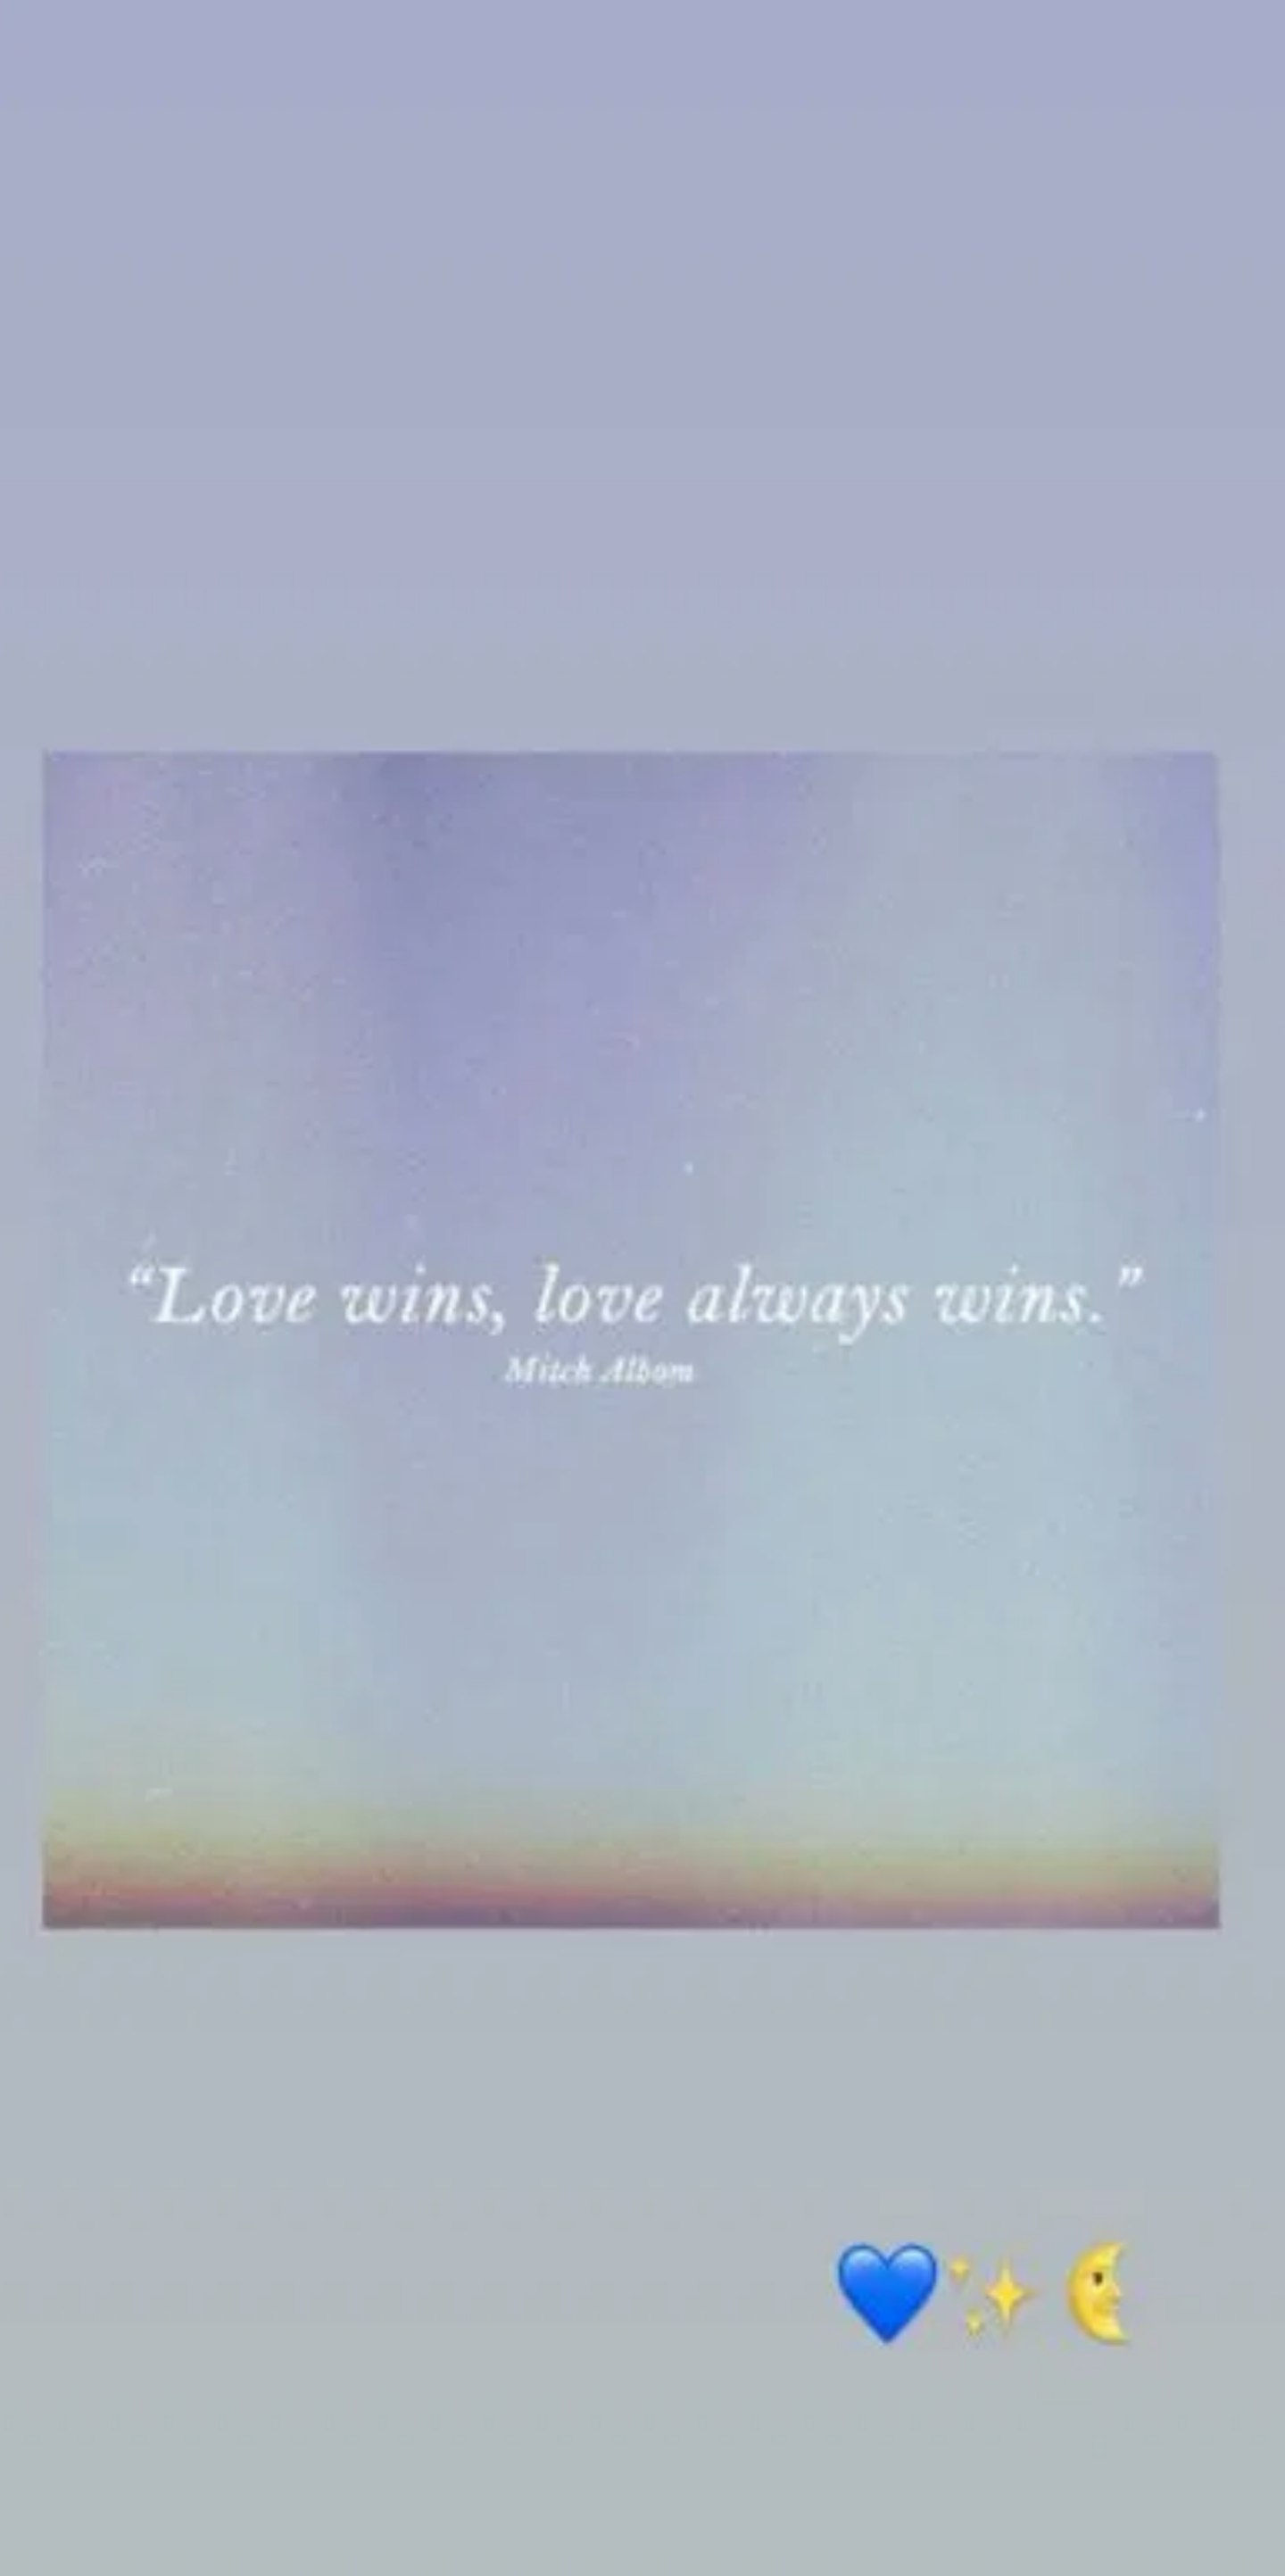 Zara Mcdermott writes 'love always wins' on Instagram story